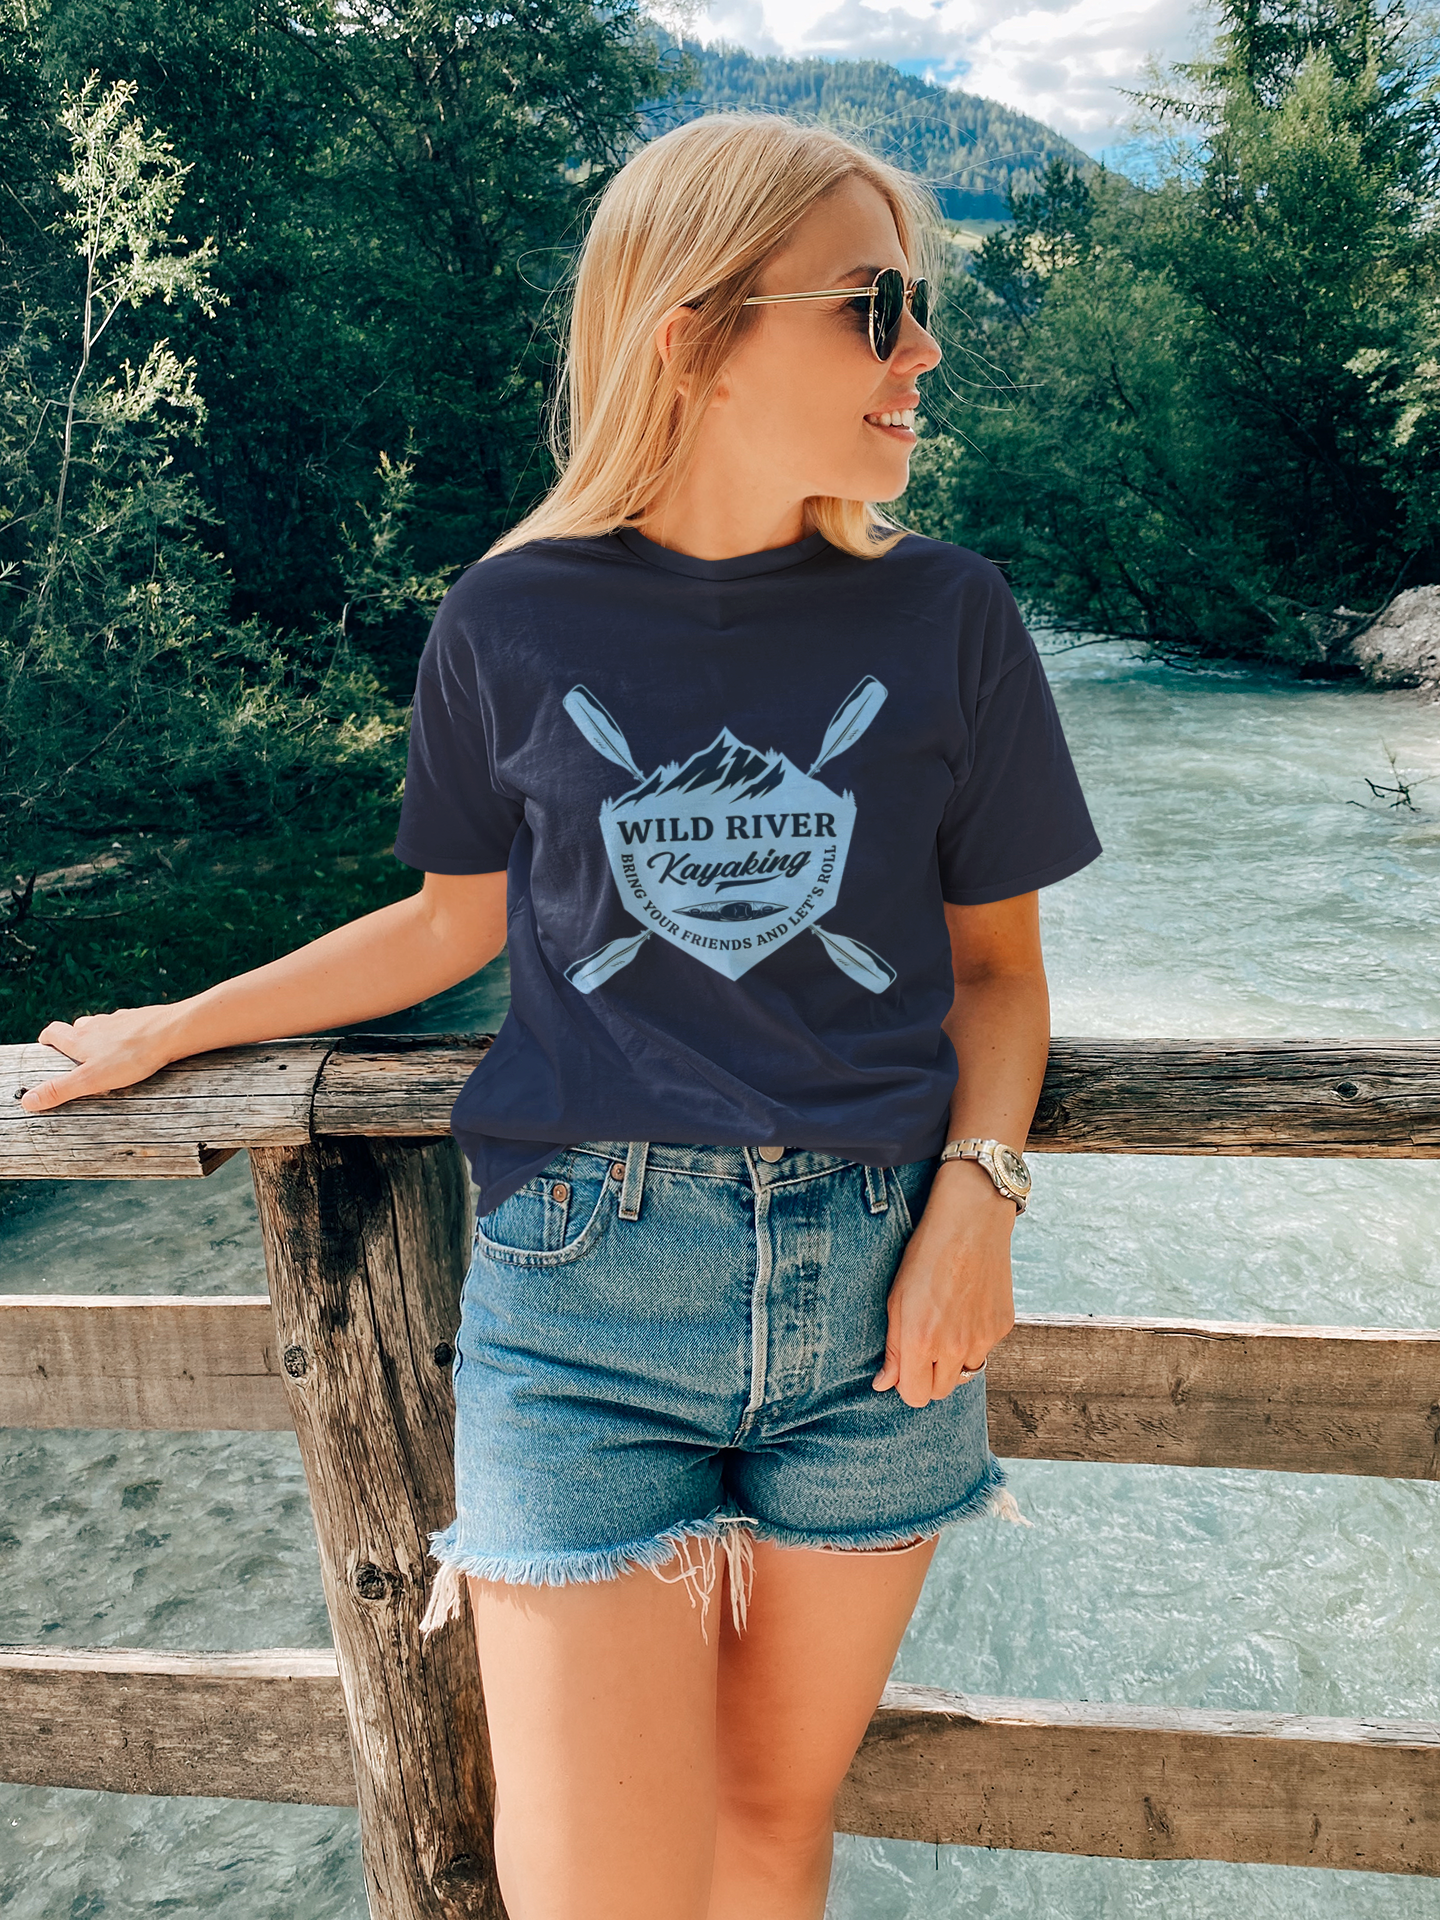 Wild River Kayaking Softstyle T-Shirt